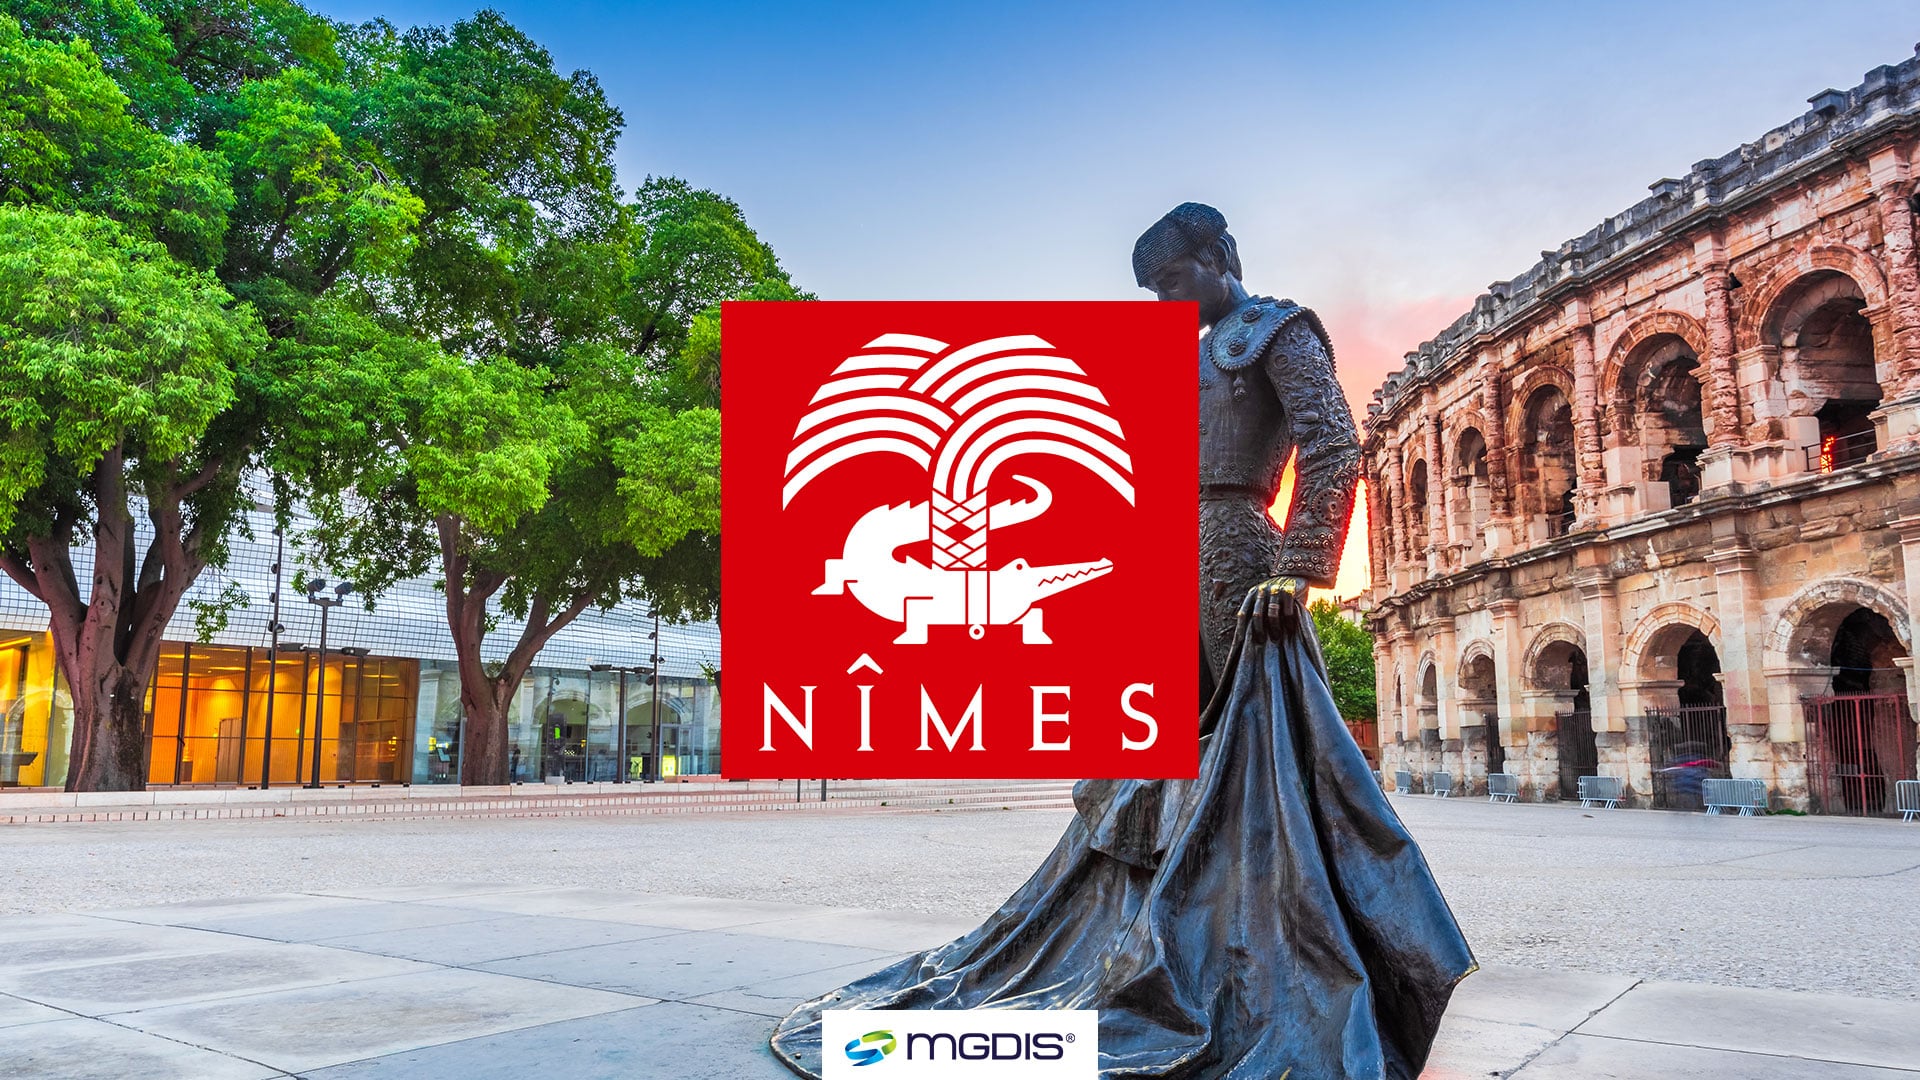 Nimes-MGDIS-portail-associations-aides-2022